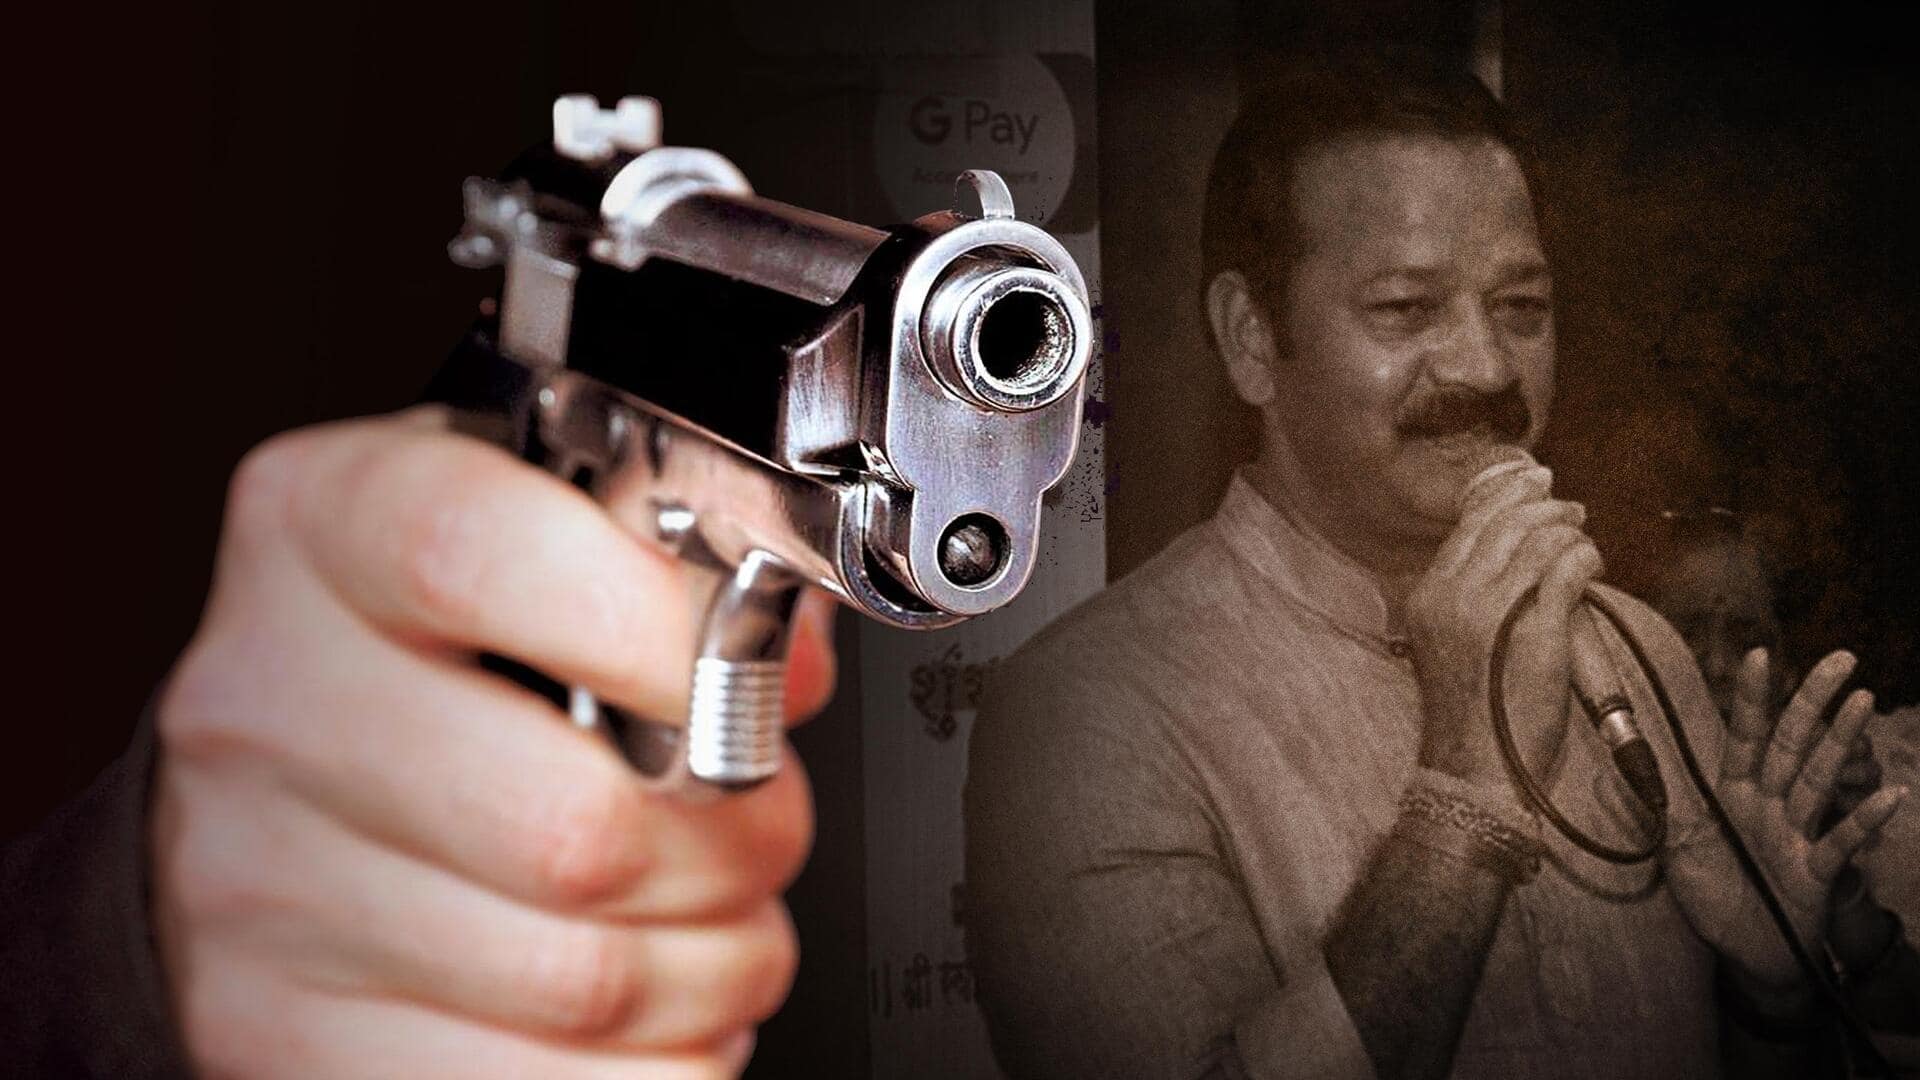 महाराष्ट्र: भाजपा विधायक गणपत गायकवाड ने शिवसेना नेता को क्यों मारी गोली? सामने आई वजह